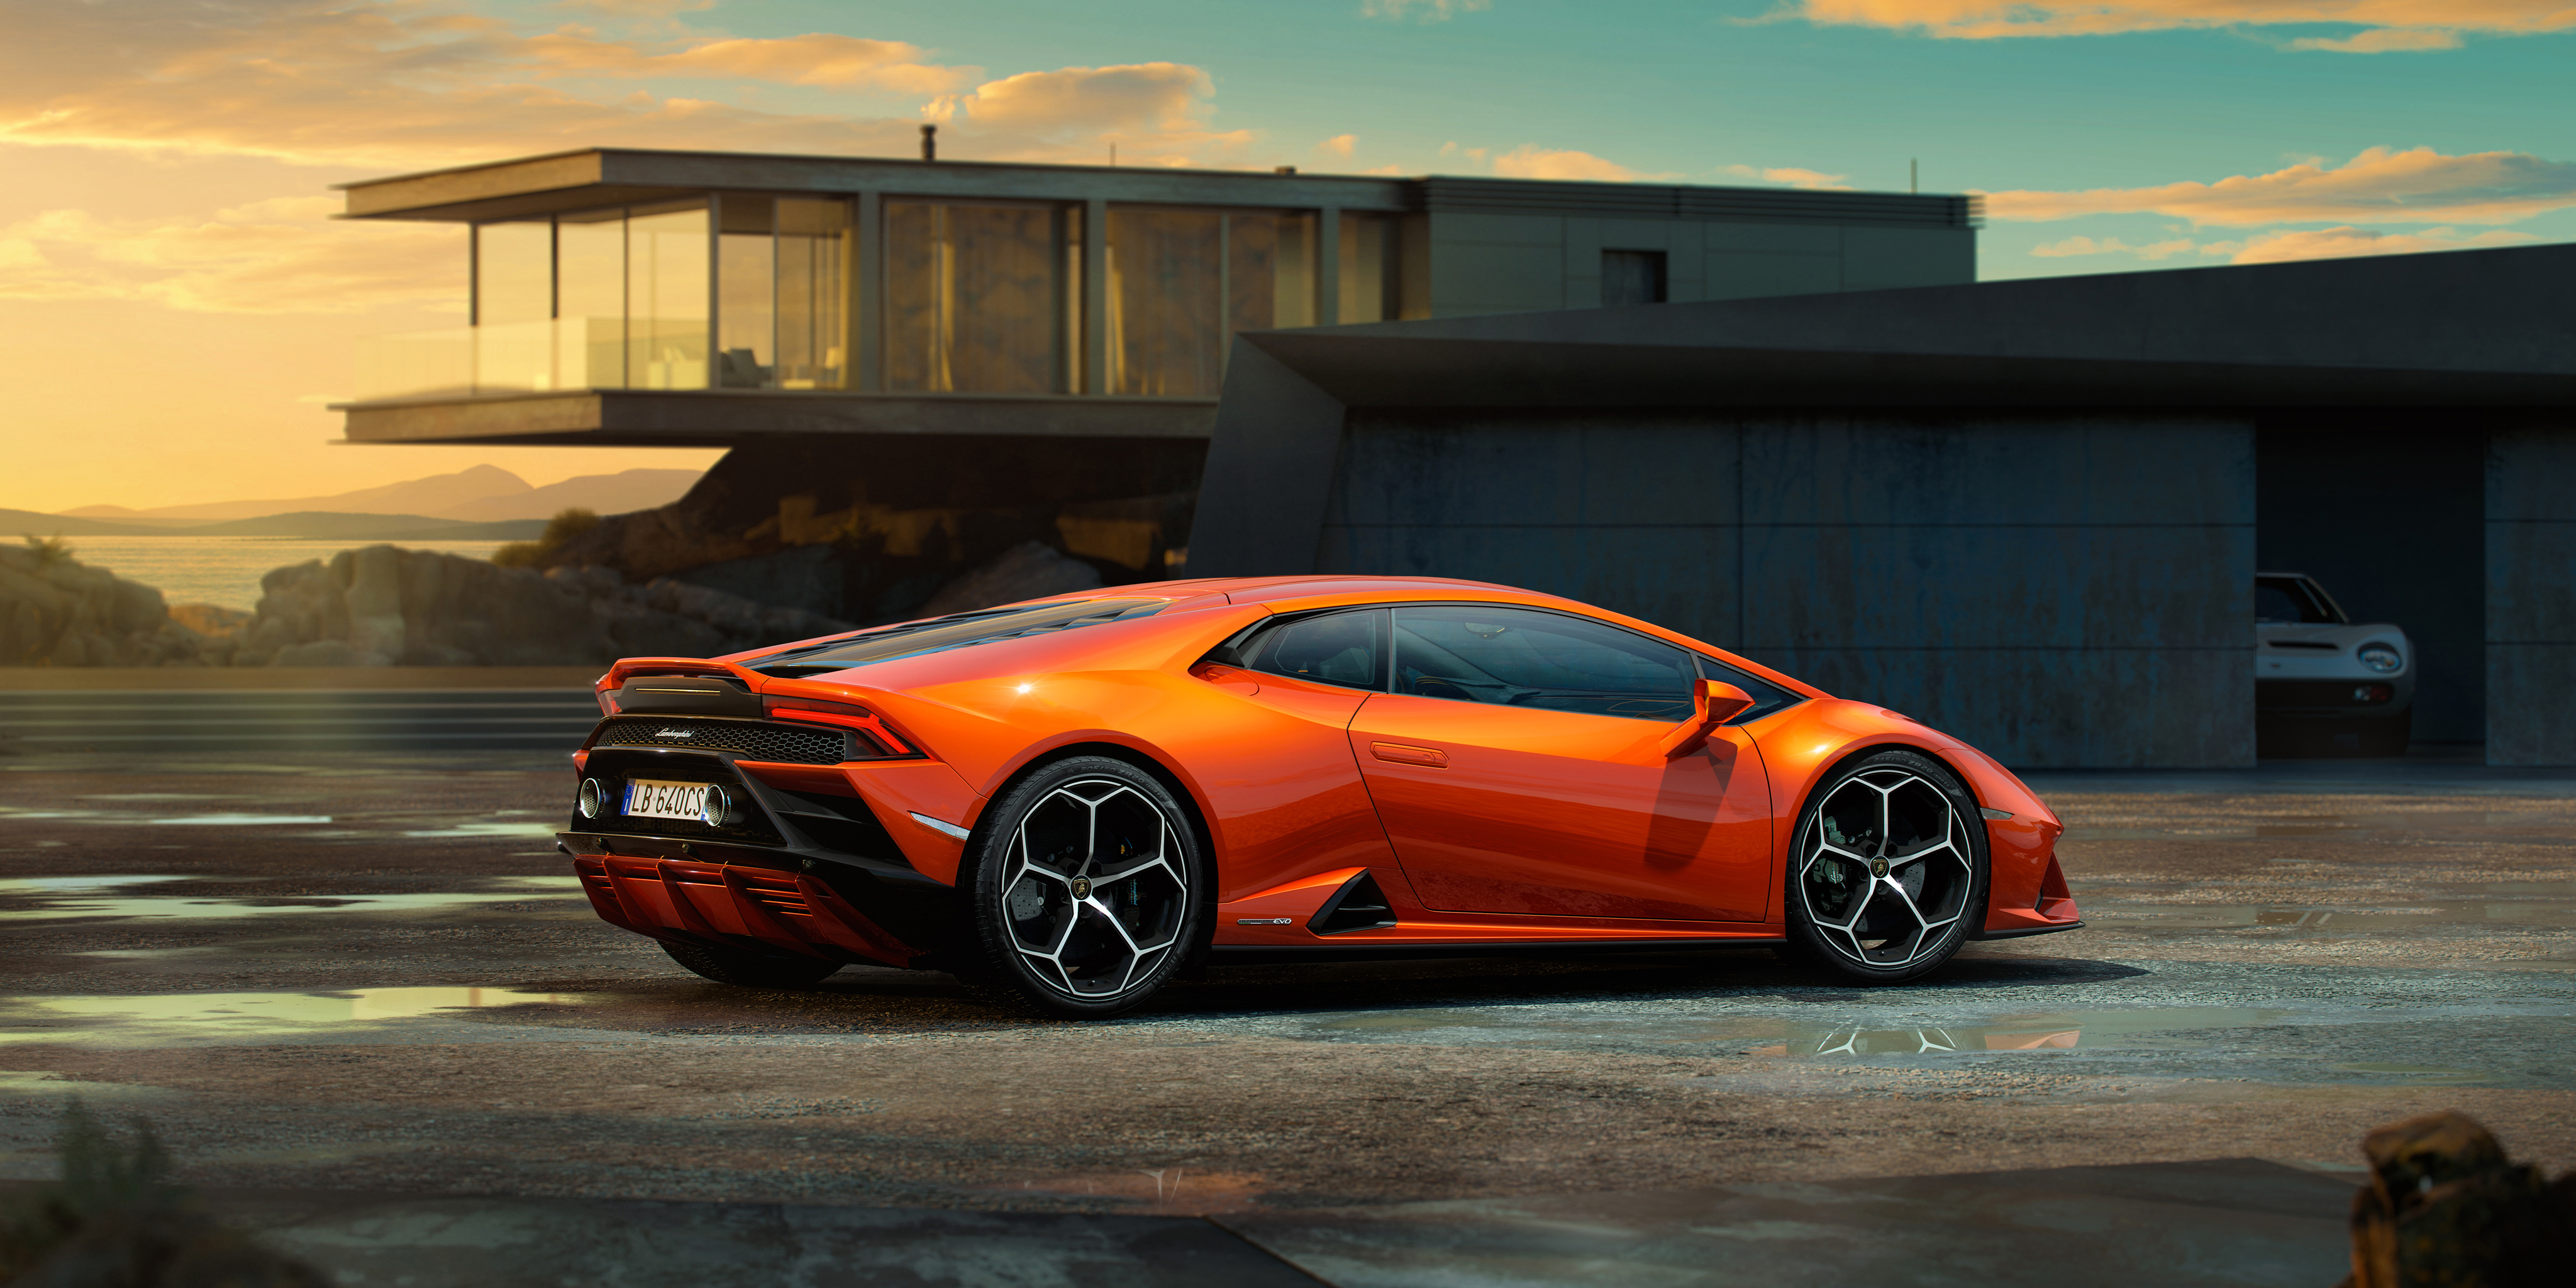 Lamborghini Huracan EVO 2019 Side View, HD Cars, 4k Wallpapers, Images